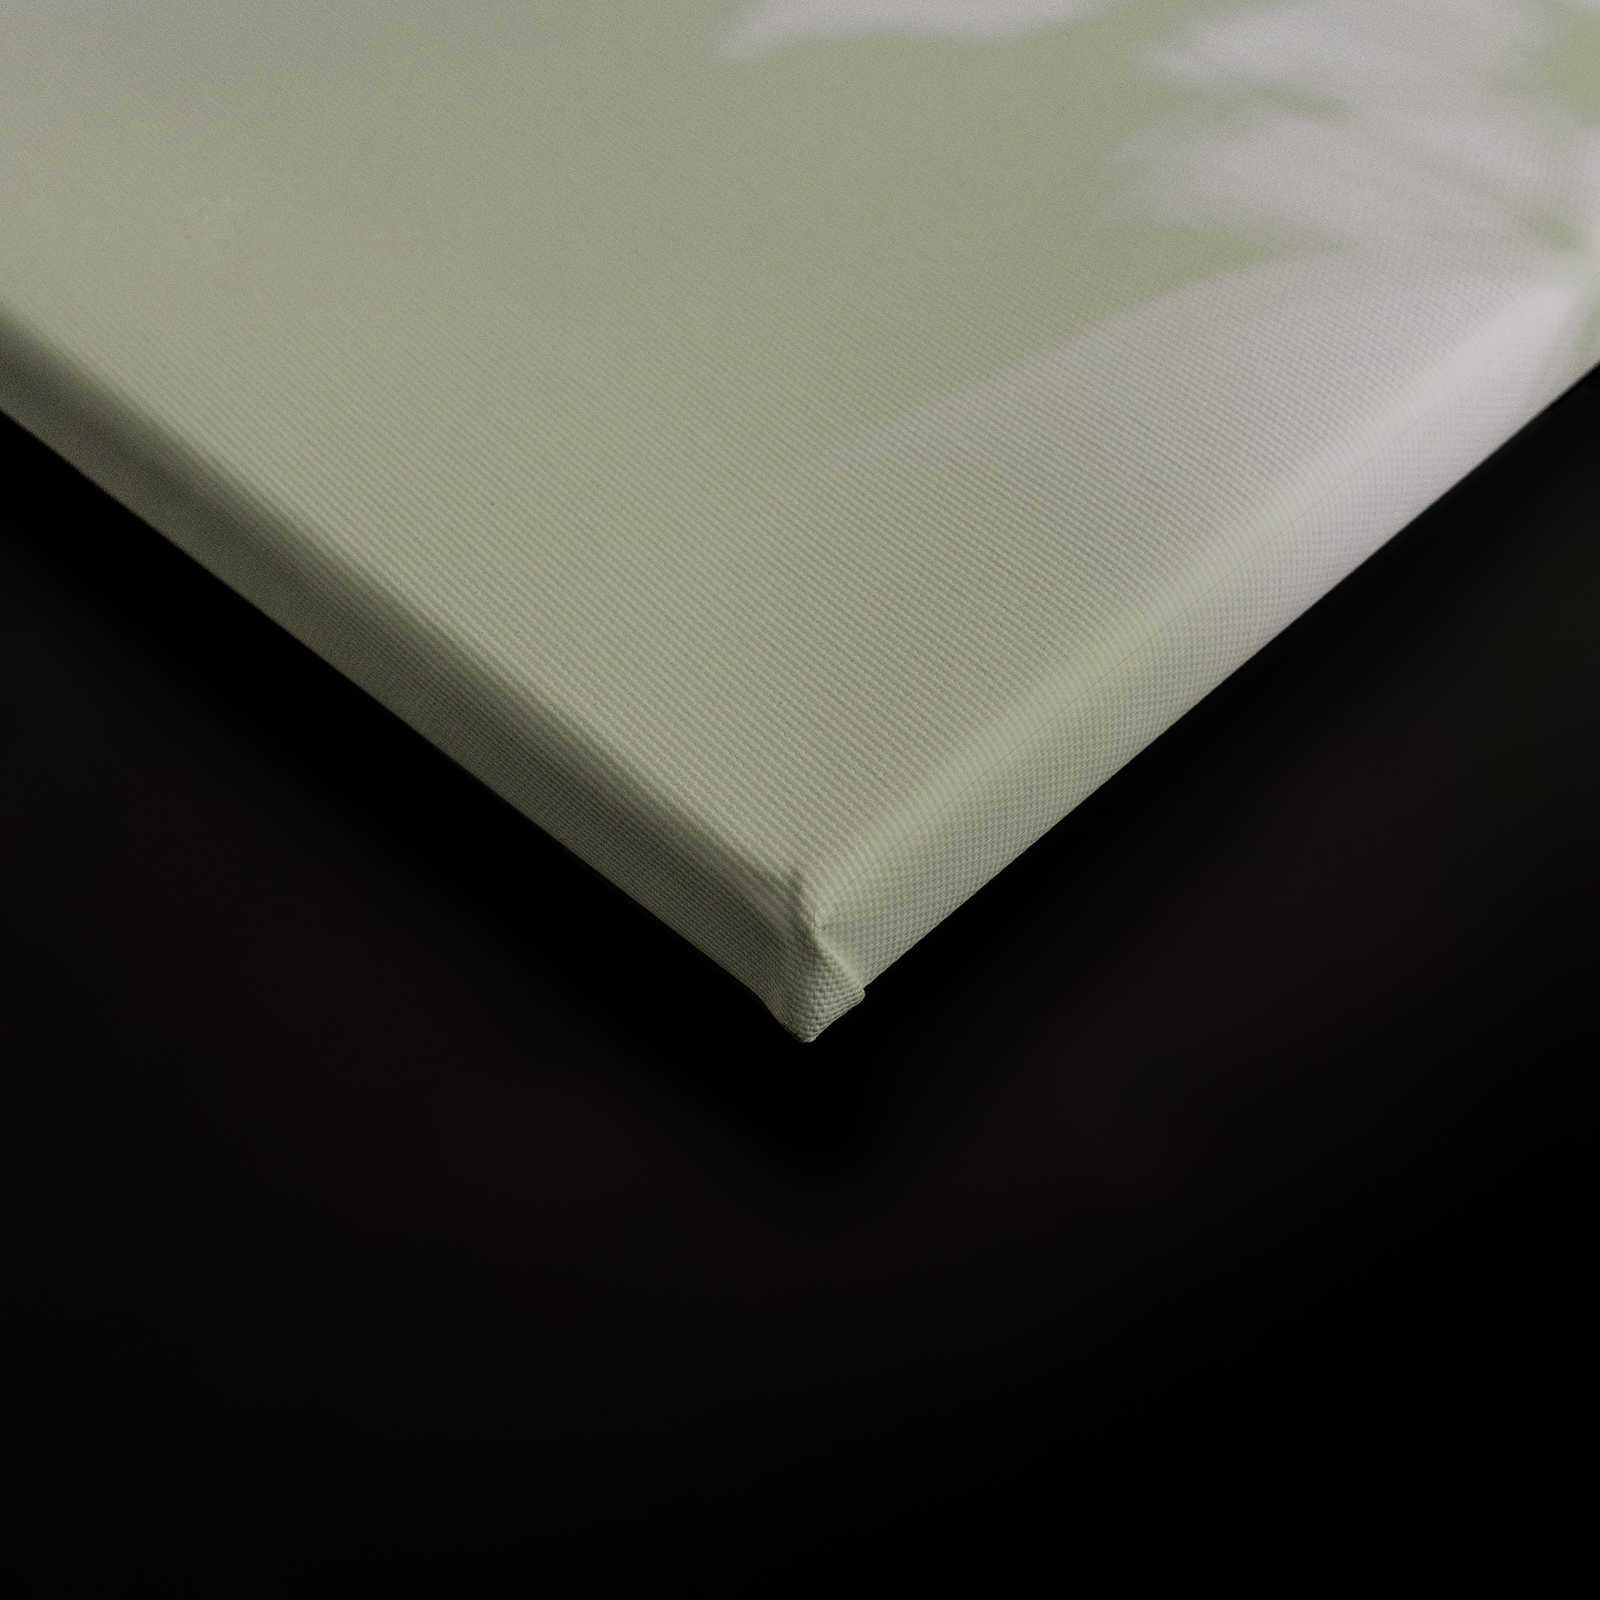             Shadow Room 3 - Natur Leinwandbild Grün & Weiß, verblasstes Design – 0,90 m x 0,60 m
        